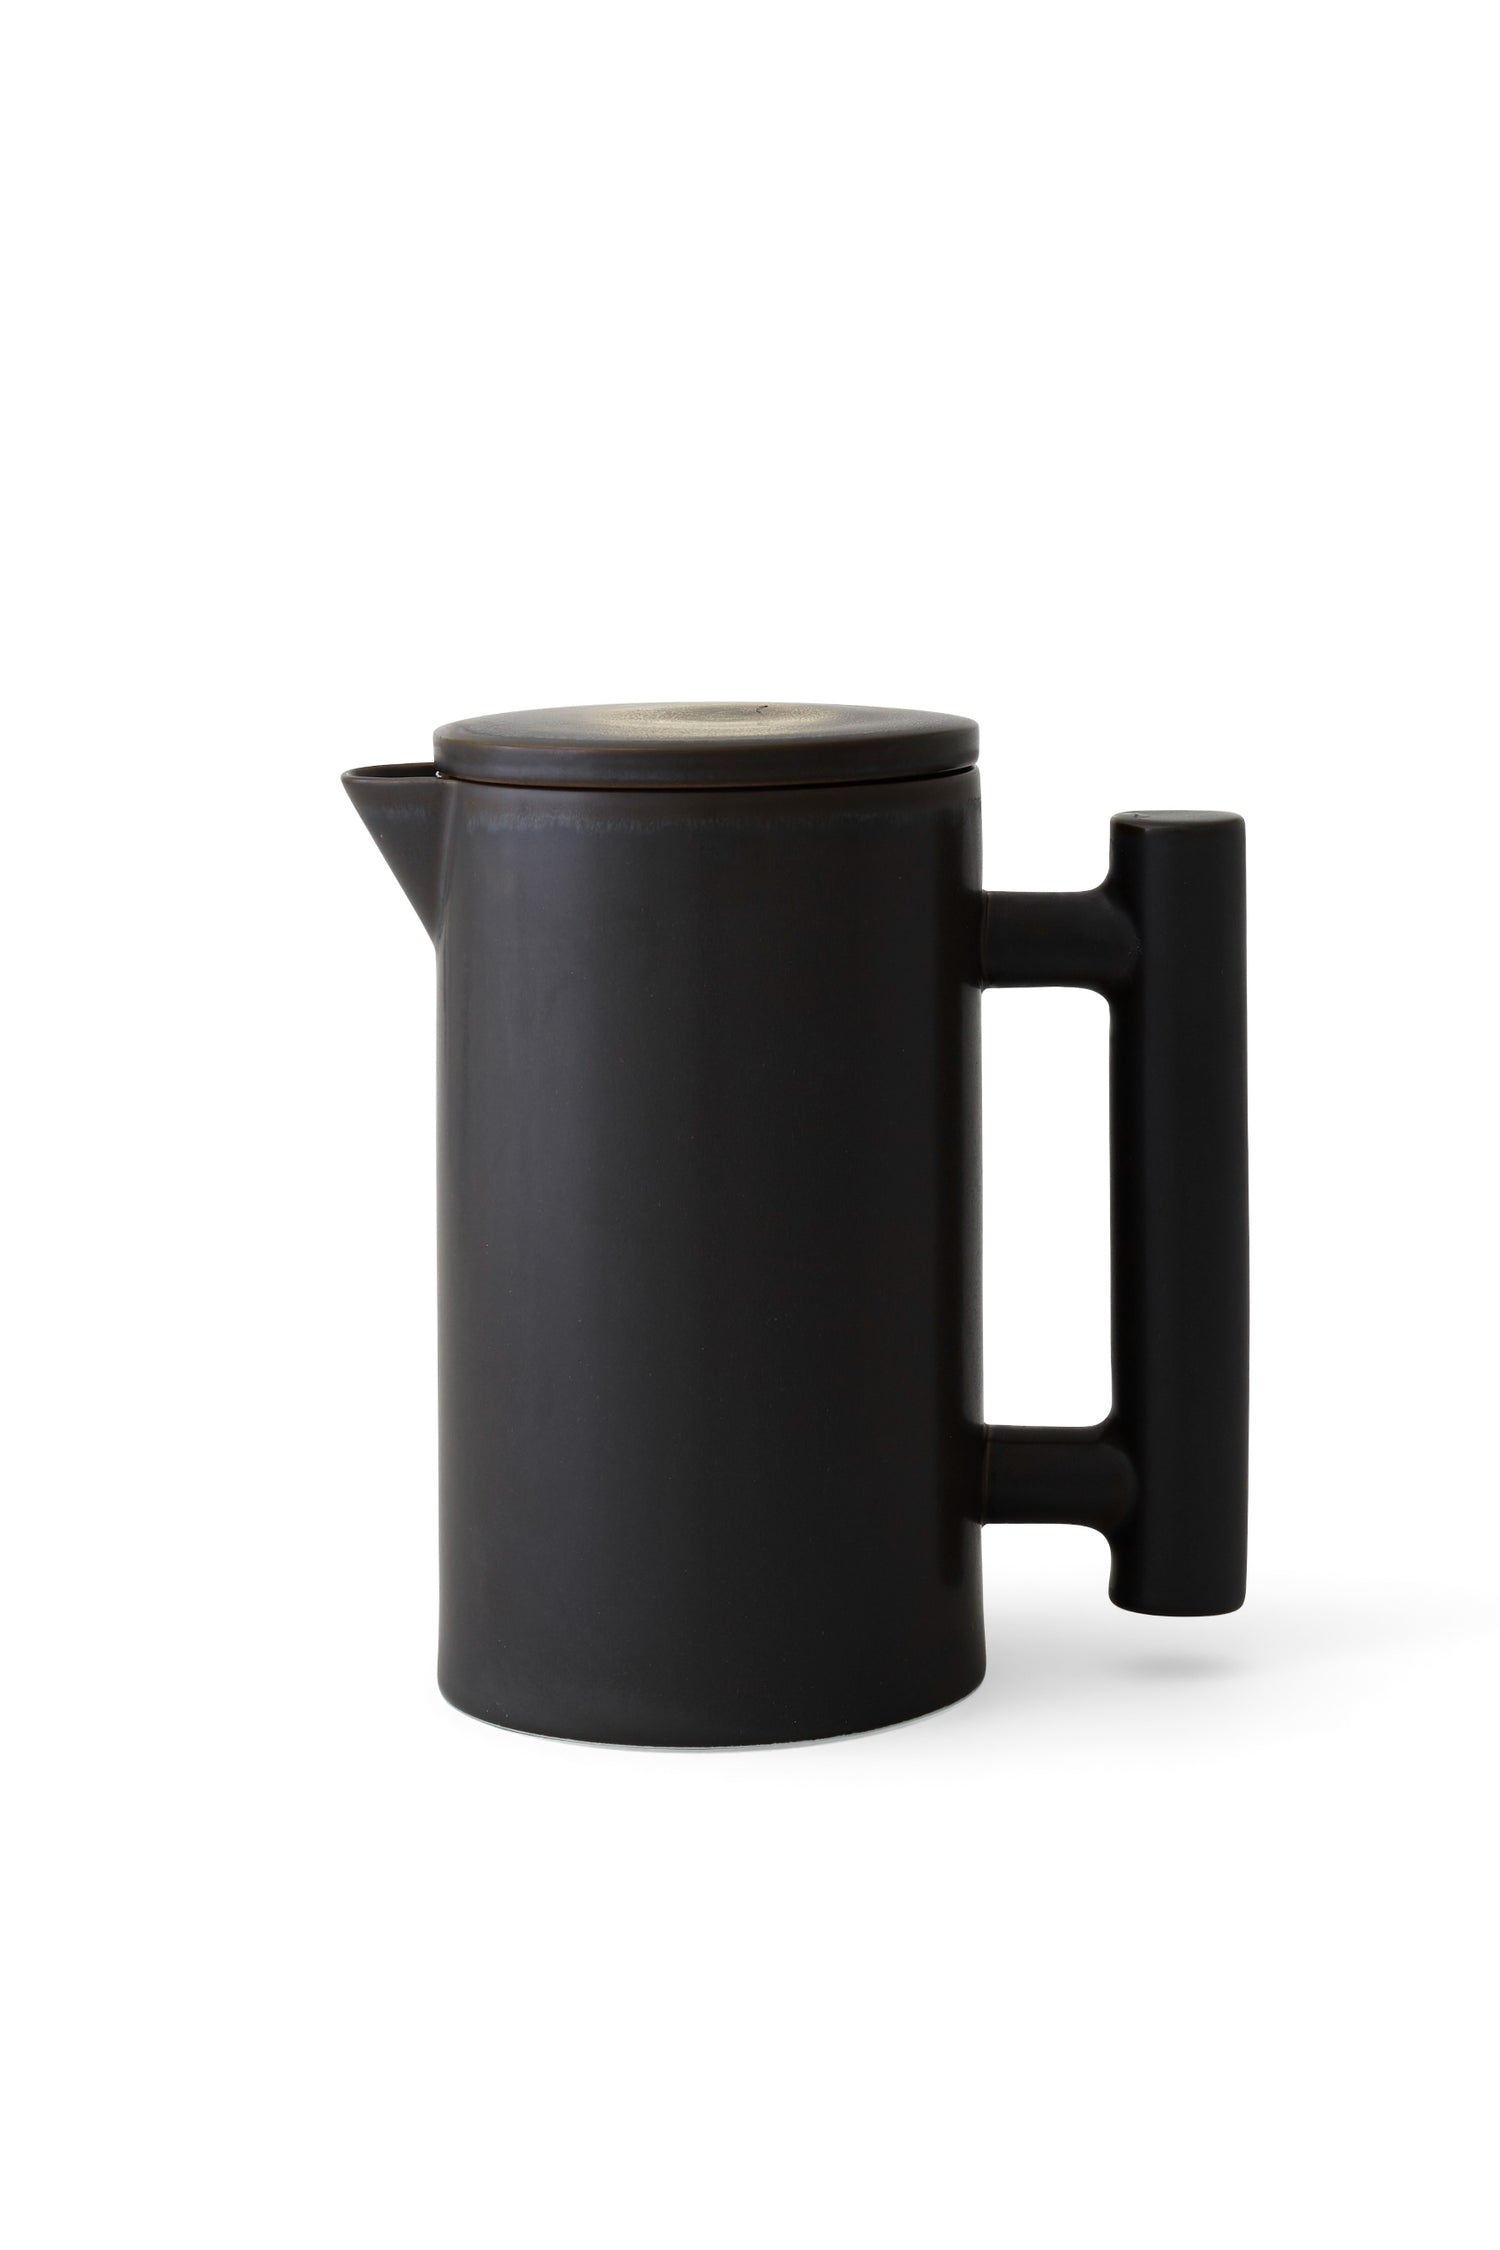 Teapot ceramic speckled dark grey  minimal look